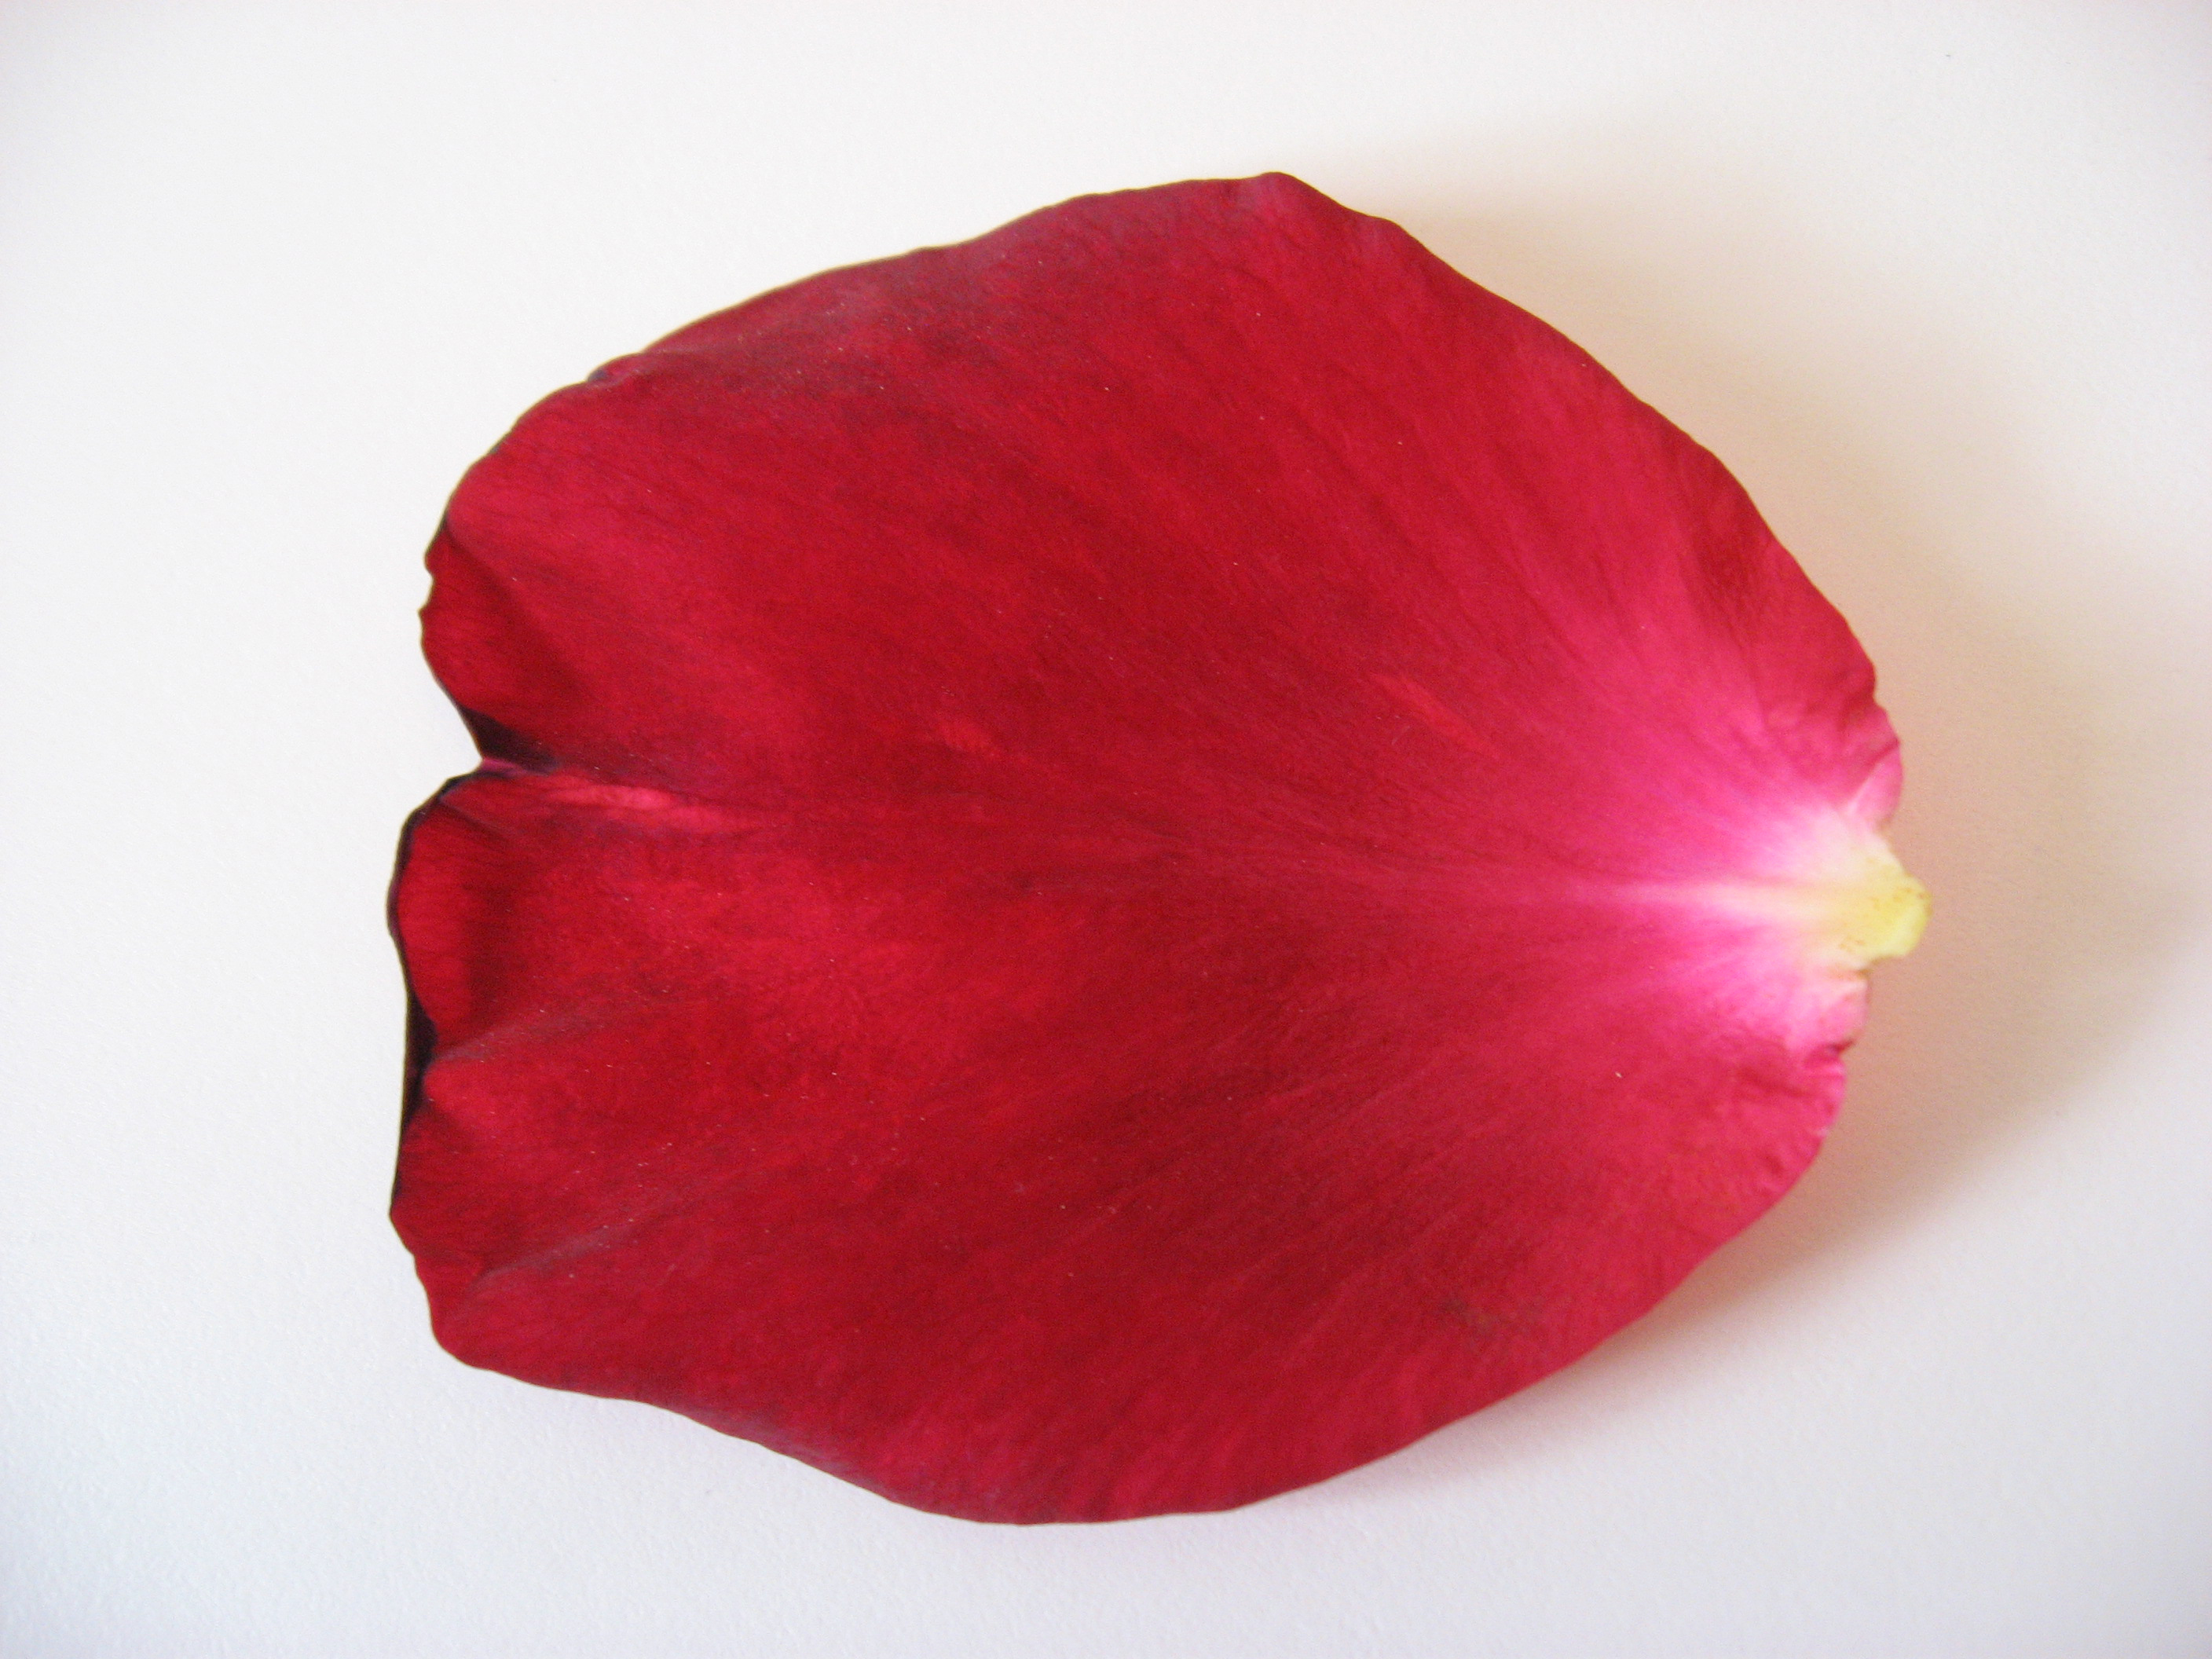 chrysanthemums-red-flowers-petals-close-up-6987241